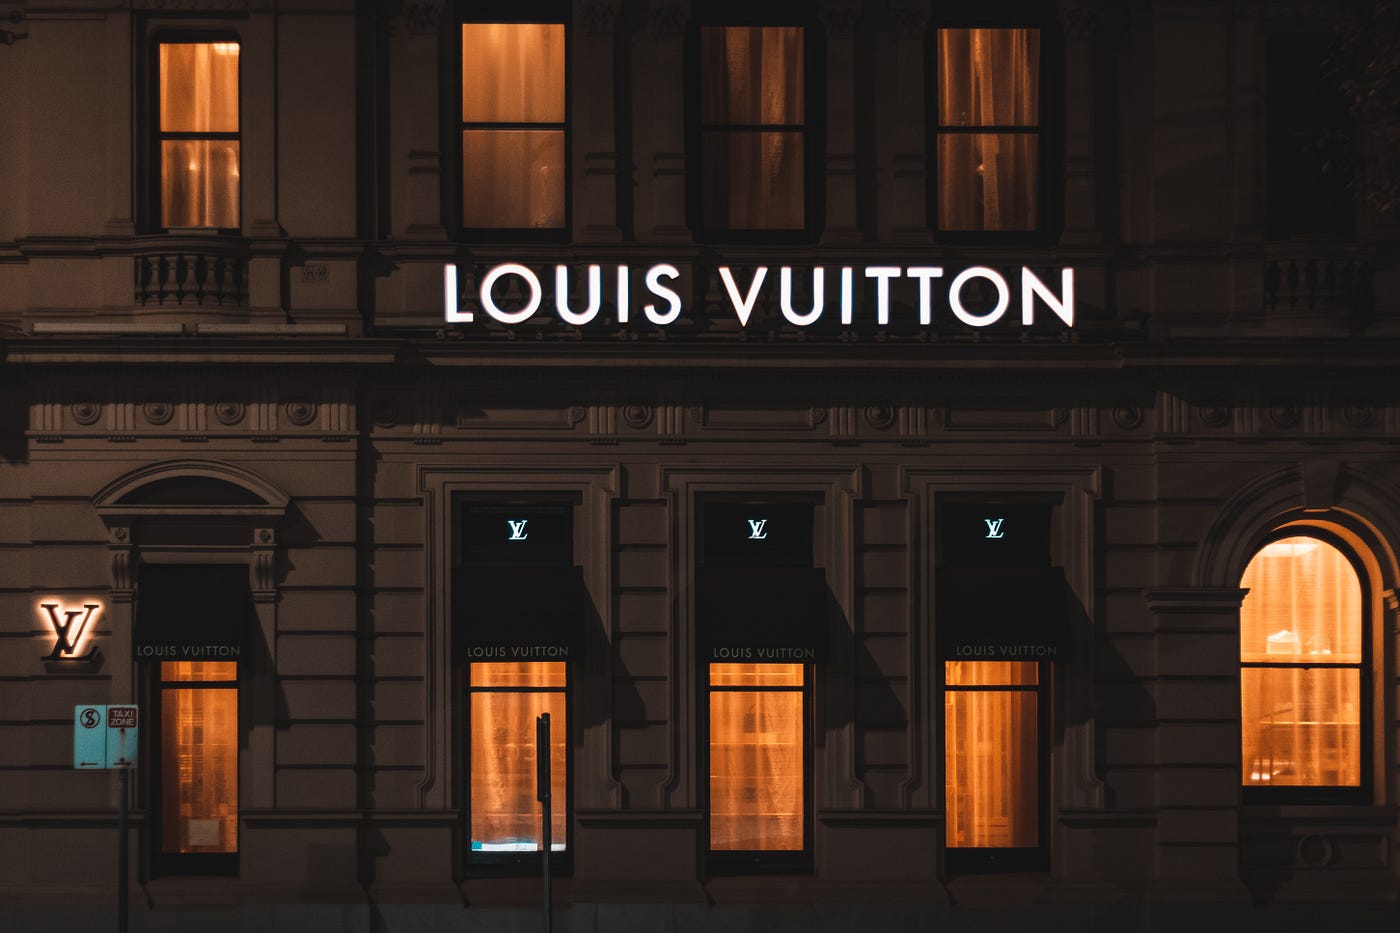 Photo (The Aestate - Tumblr)  City aesthetic, Louis vuitton, Luxury store